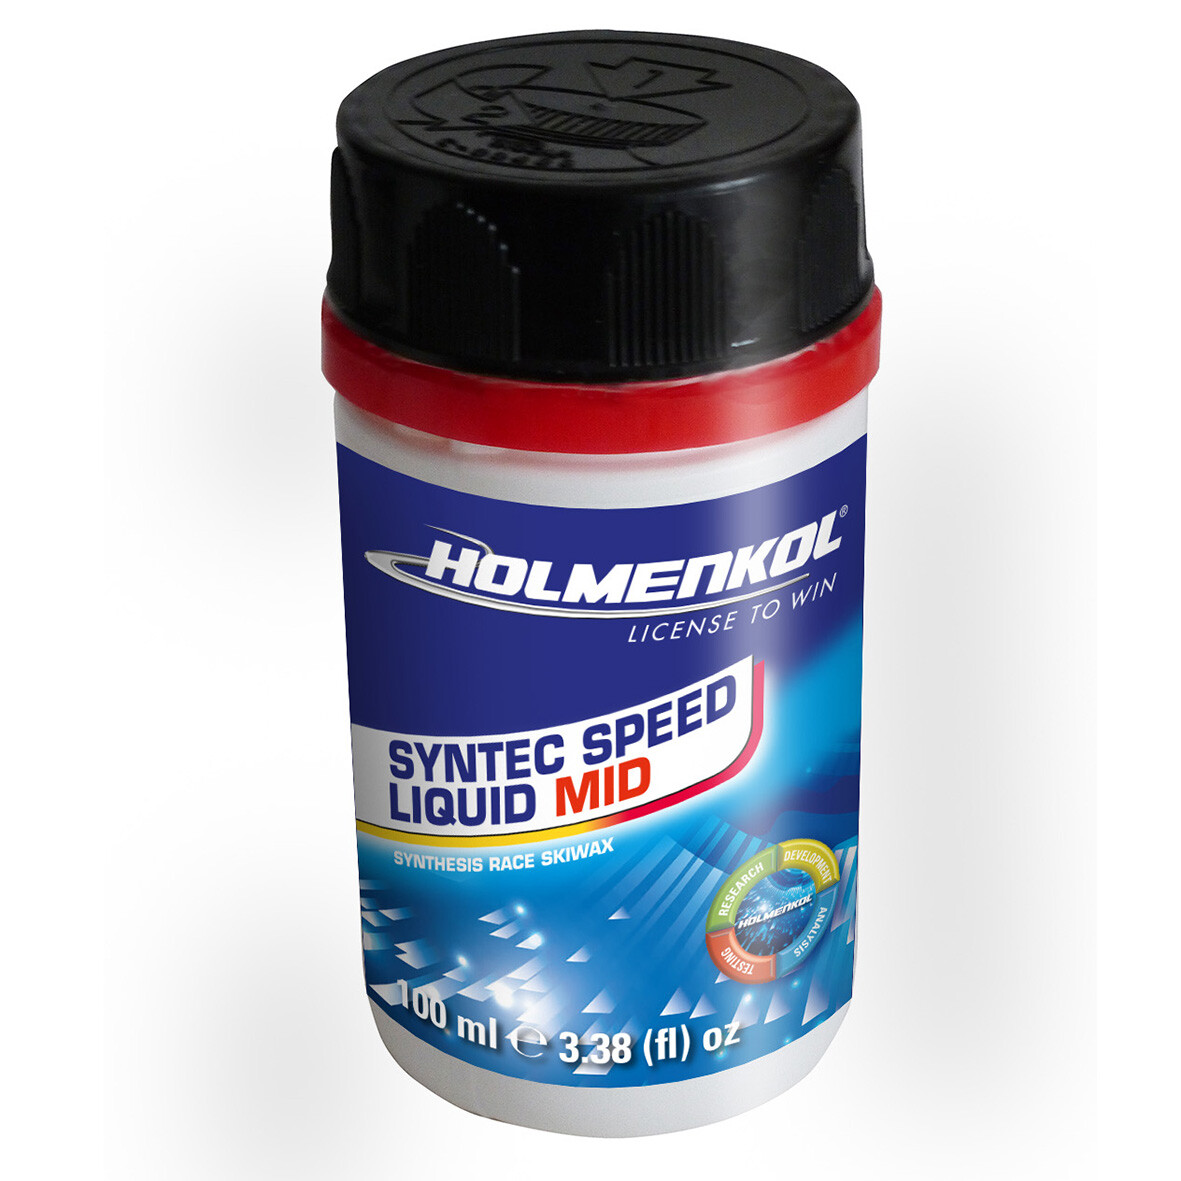 Holmenkol Syntec Speed liquid mid 100 ml